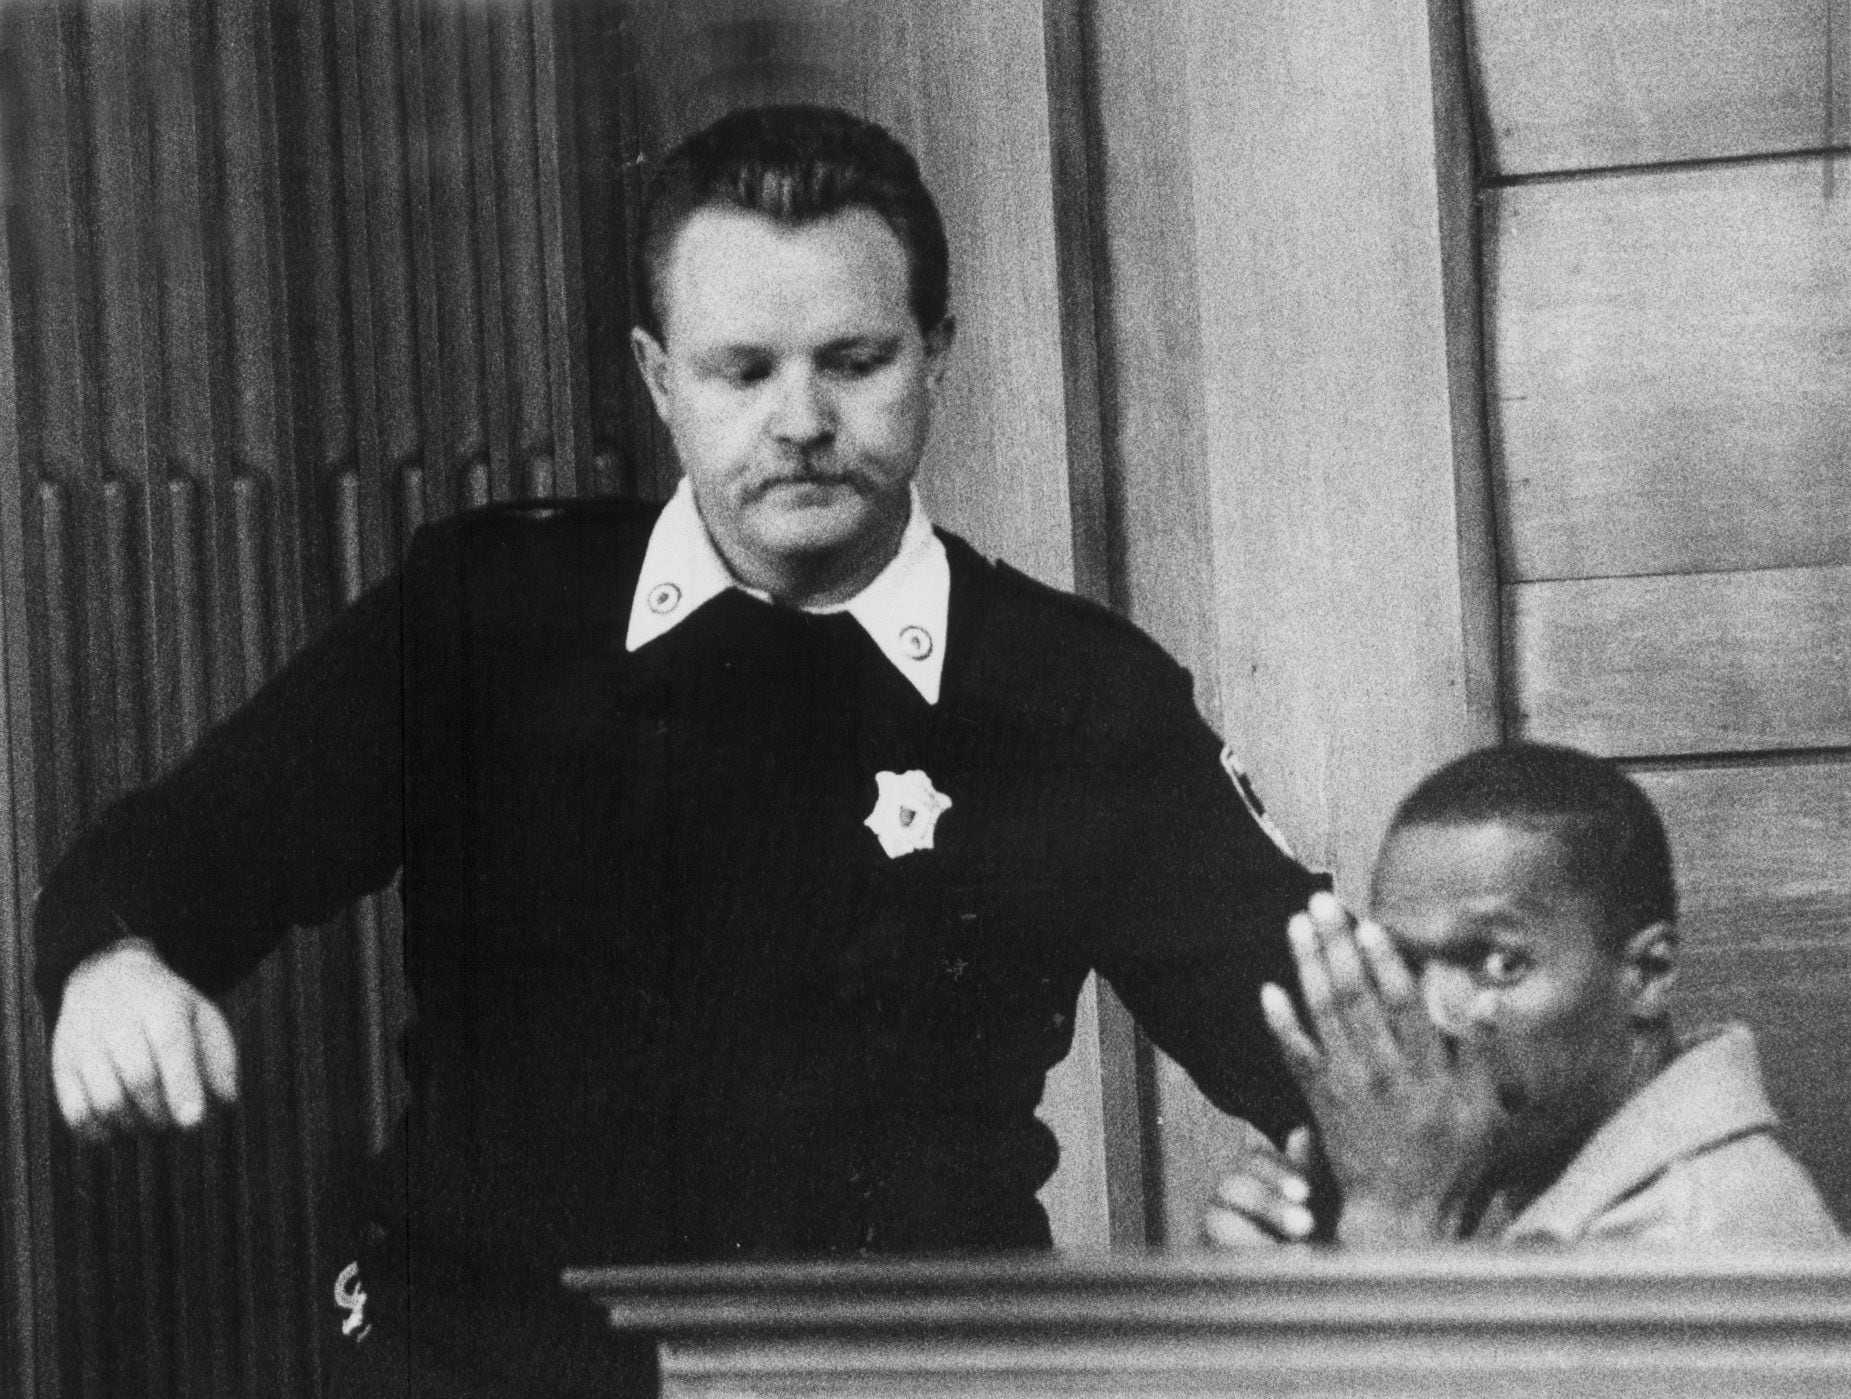 Willie Bennett was seen in a courtroom.
